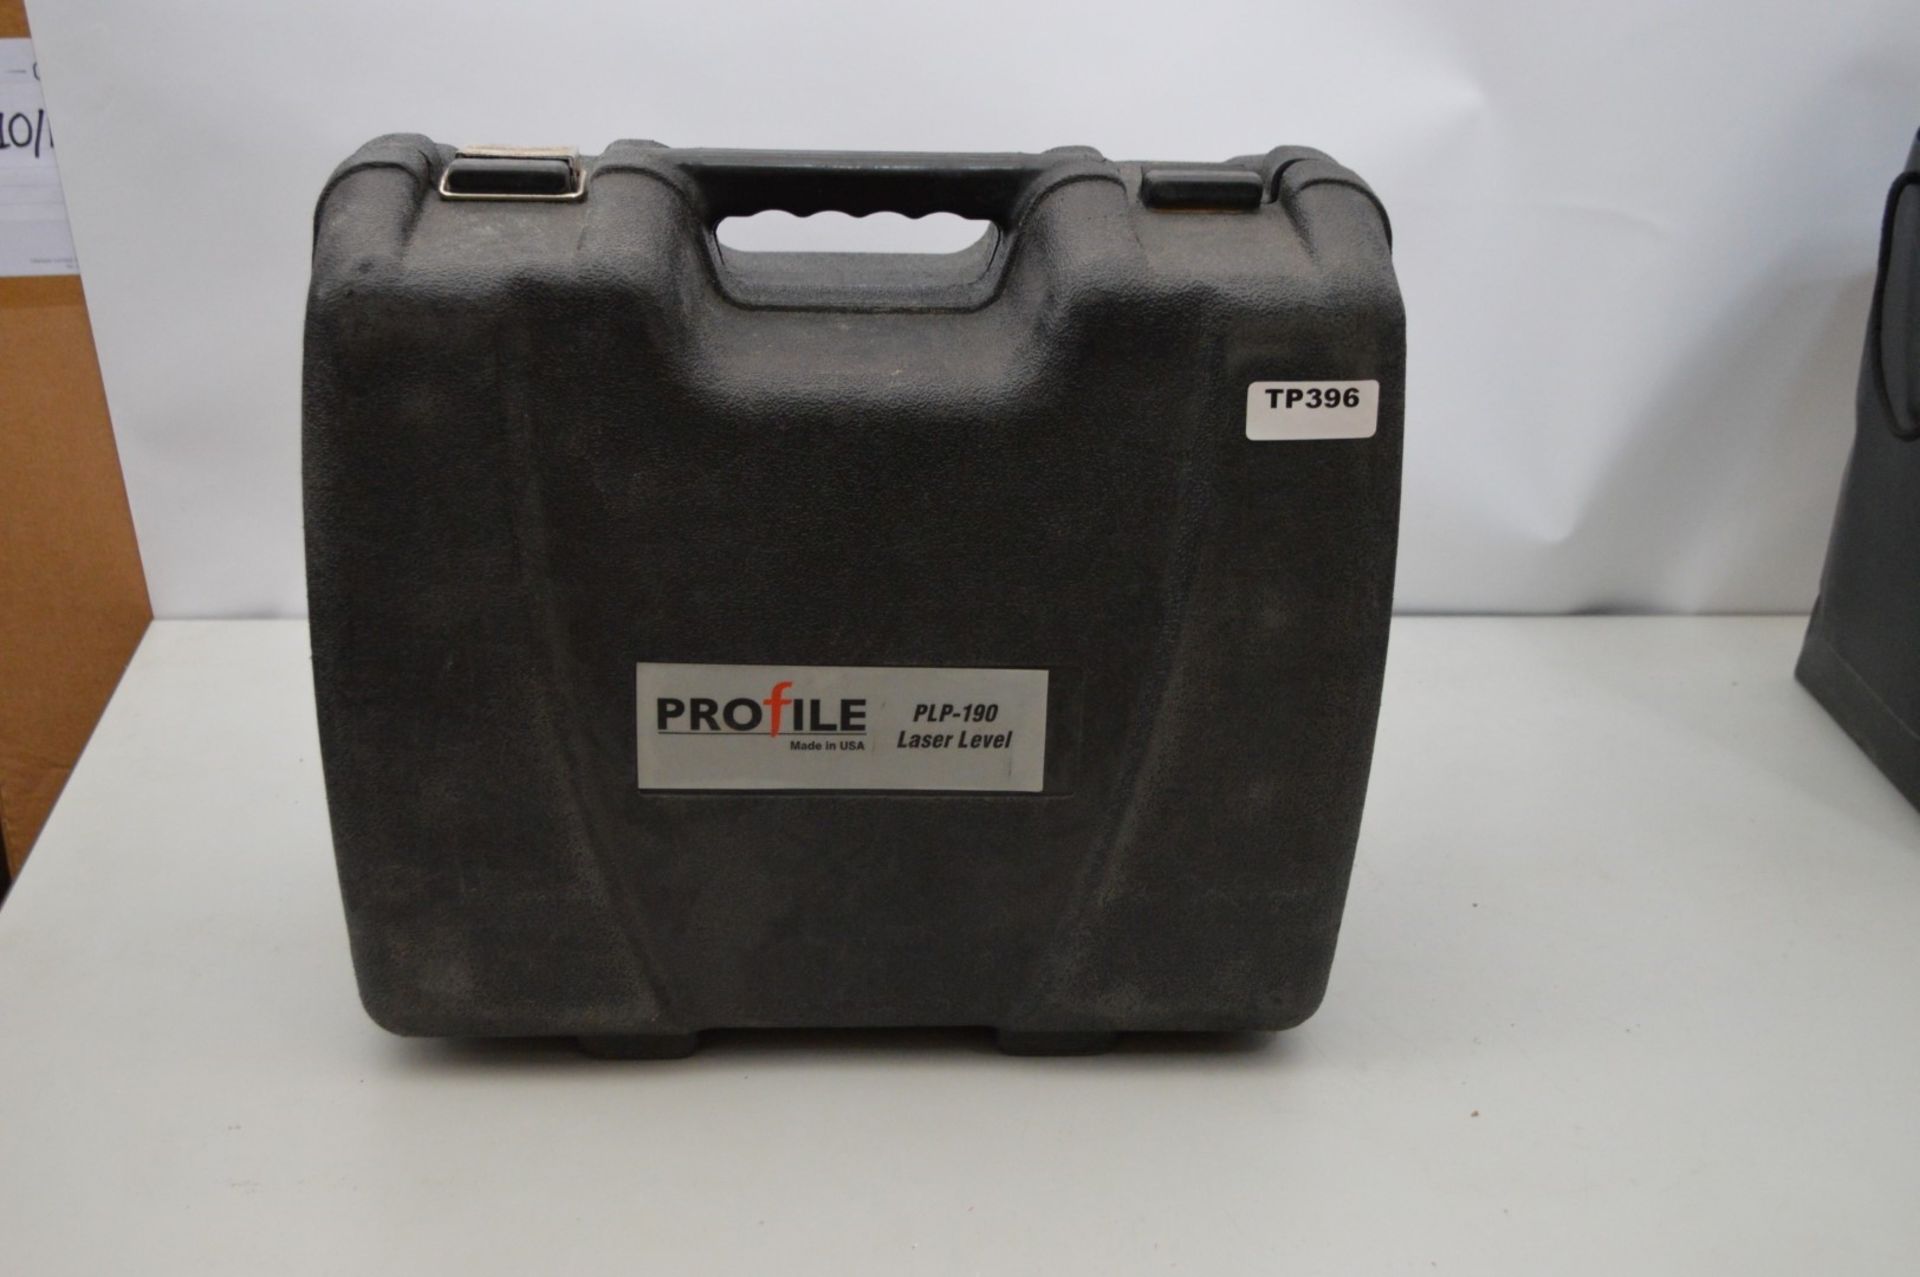 1 x Profile PLP-190 Laser Level - Ref TP396 - Image 3 of 3